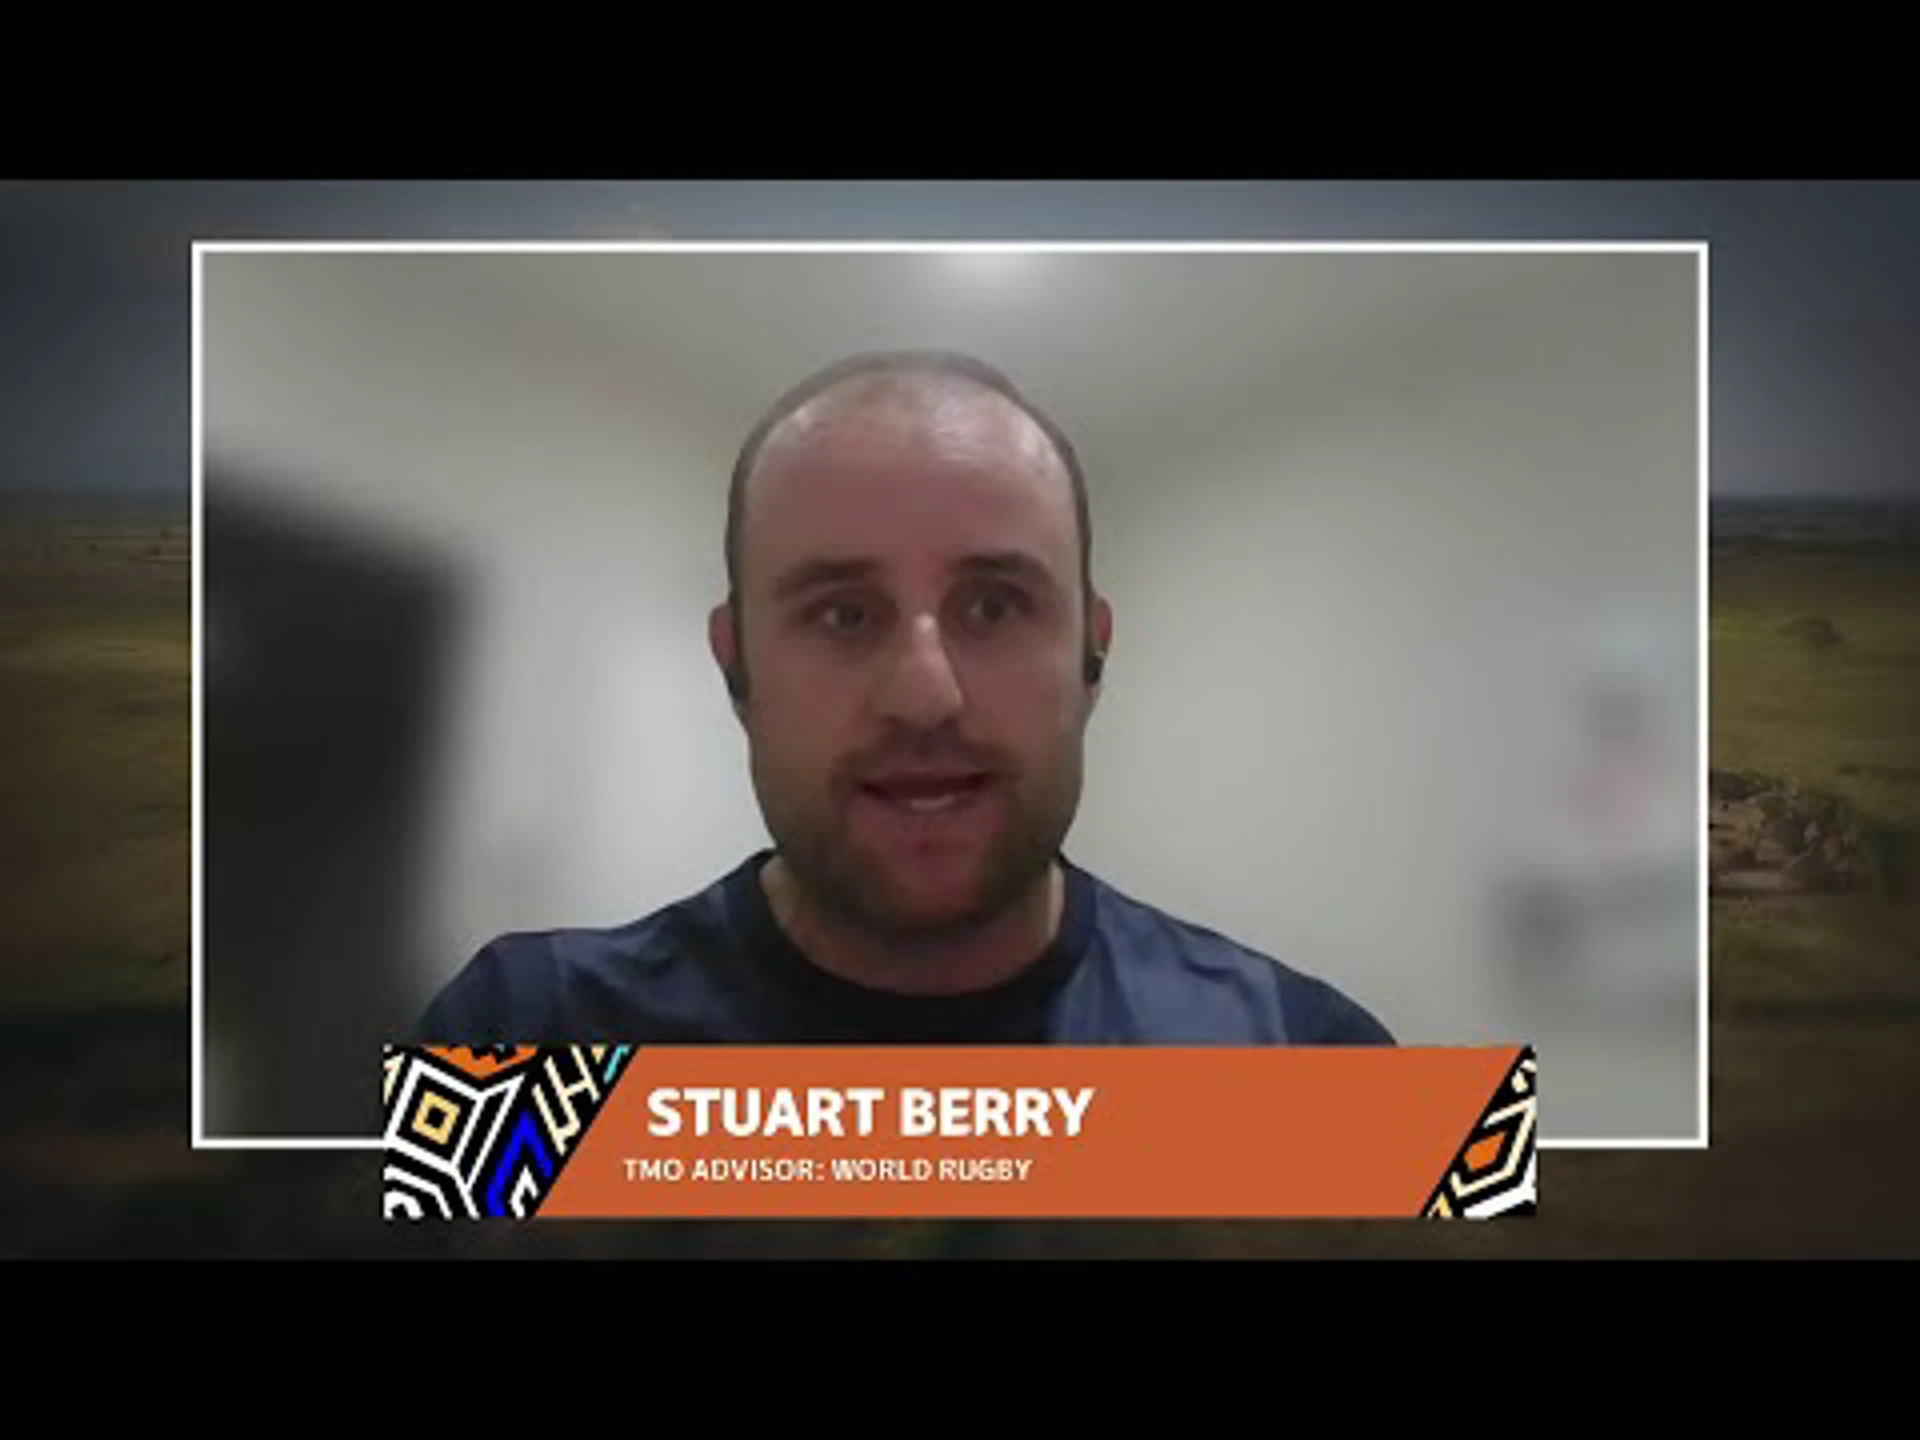 Stuart Berry explains the new TMO Protocols being trialed in the Springboks vs Ireland Series